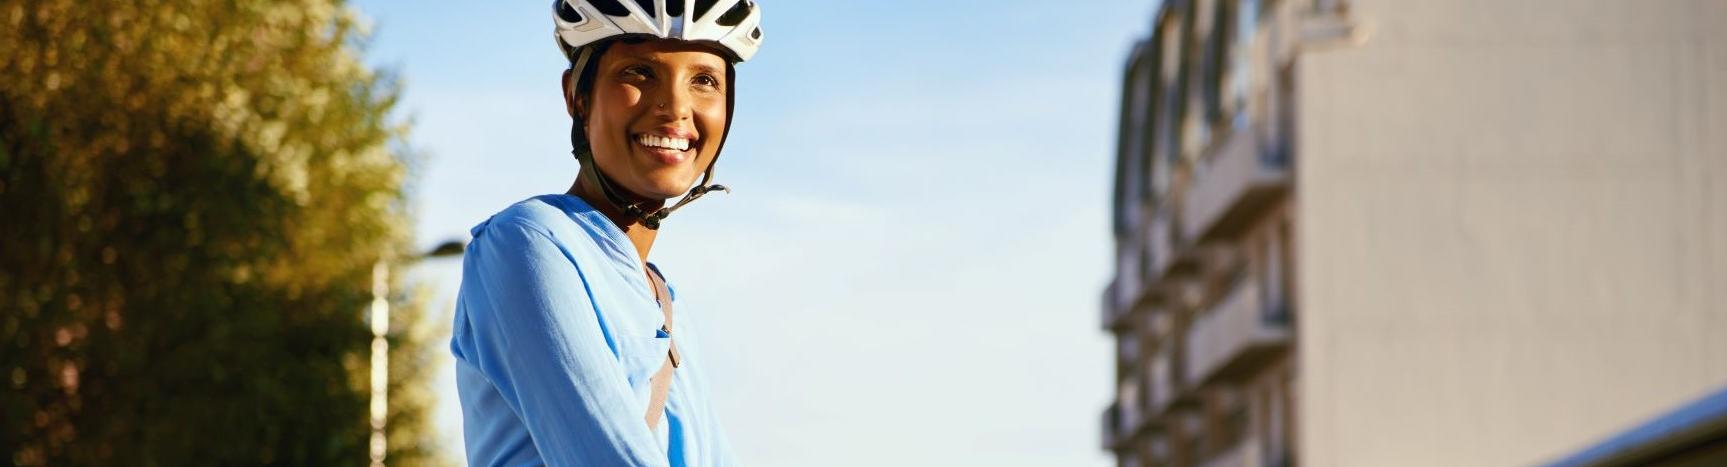 Frau auf Rad mit Helm